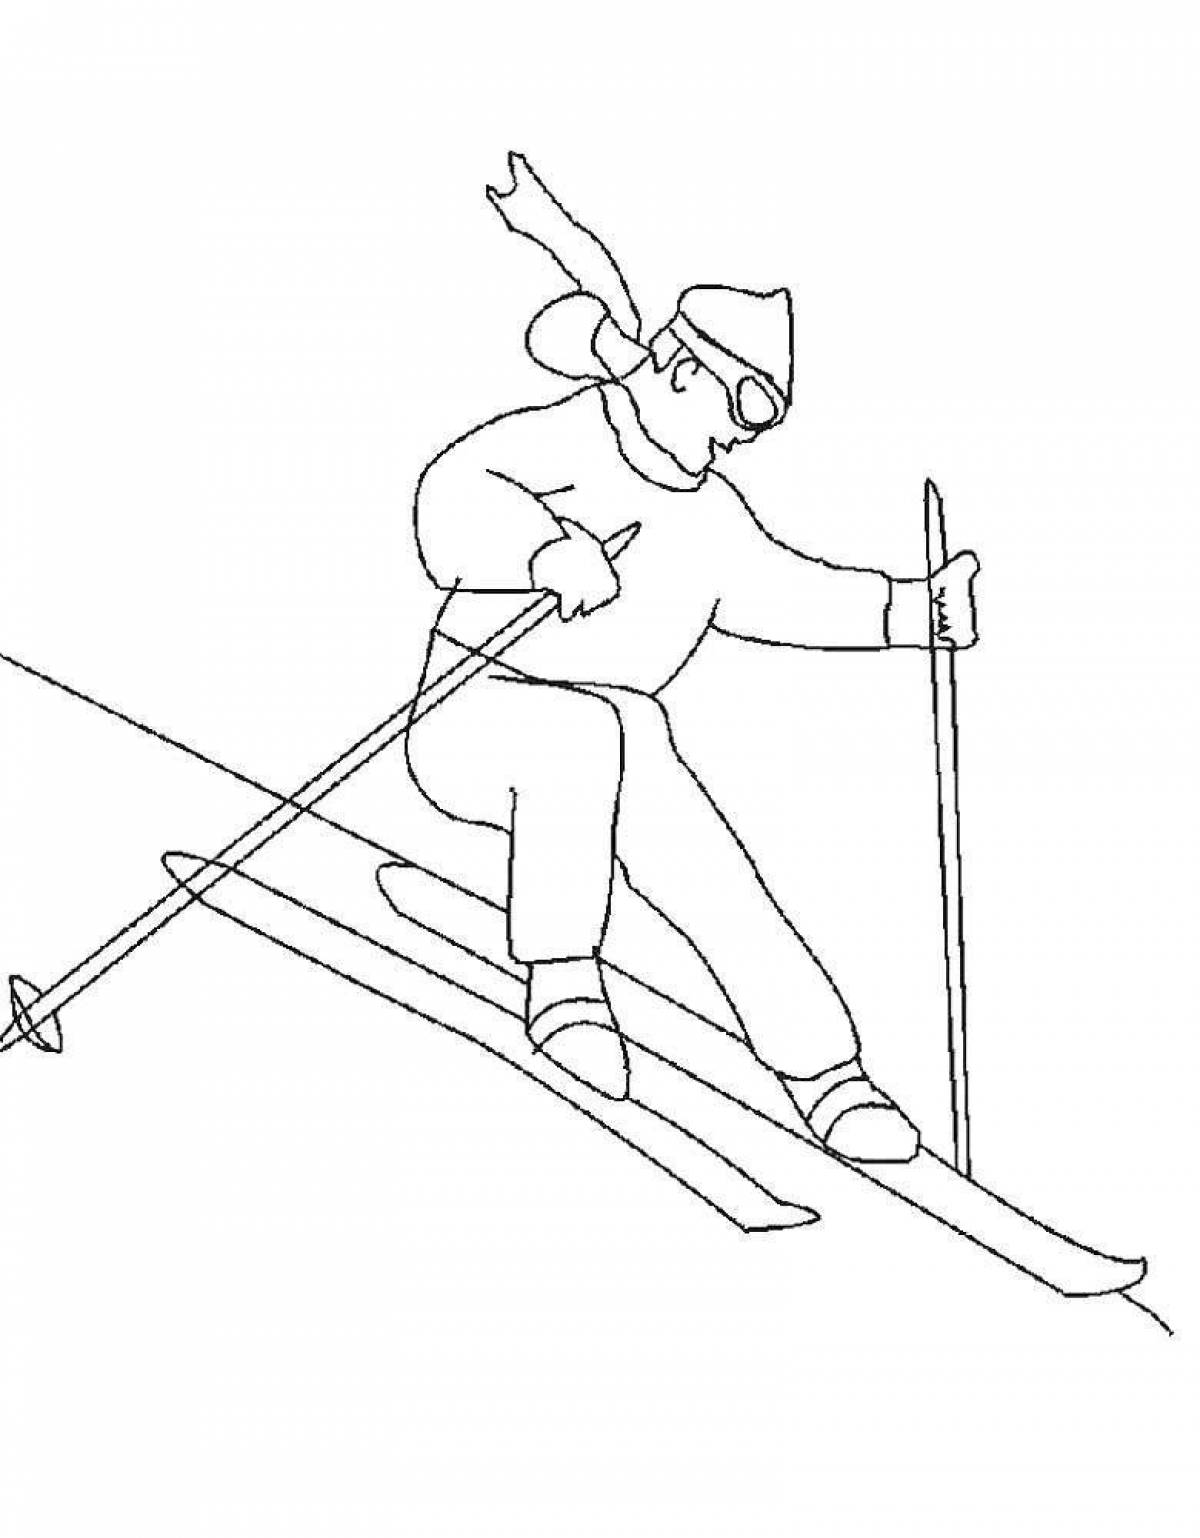 Coloring page energetic skier